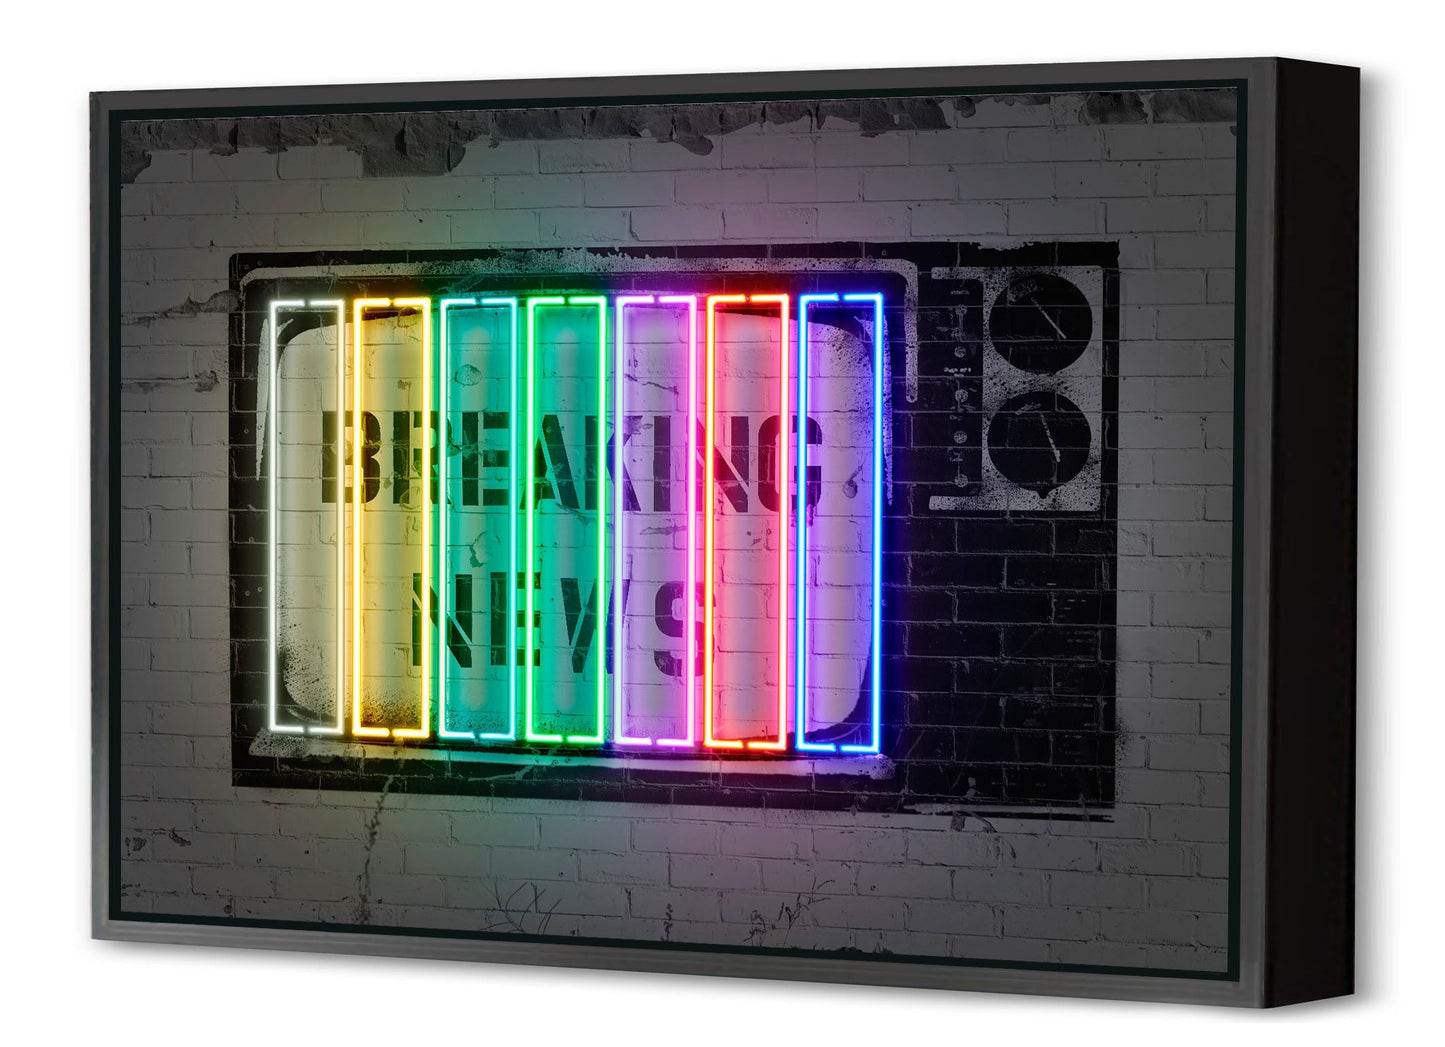 Breaking News-neon-art, print-Canvas Print with Box Frame-40 x 60 cm-BLUE SHAKER